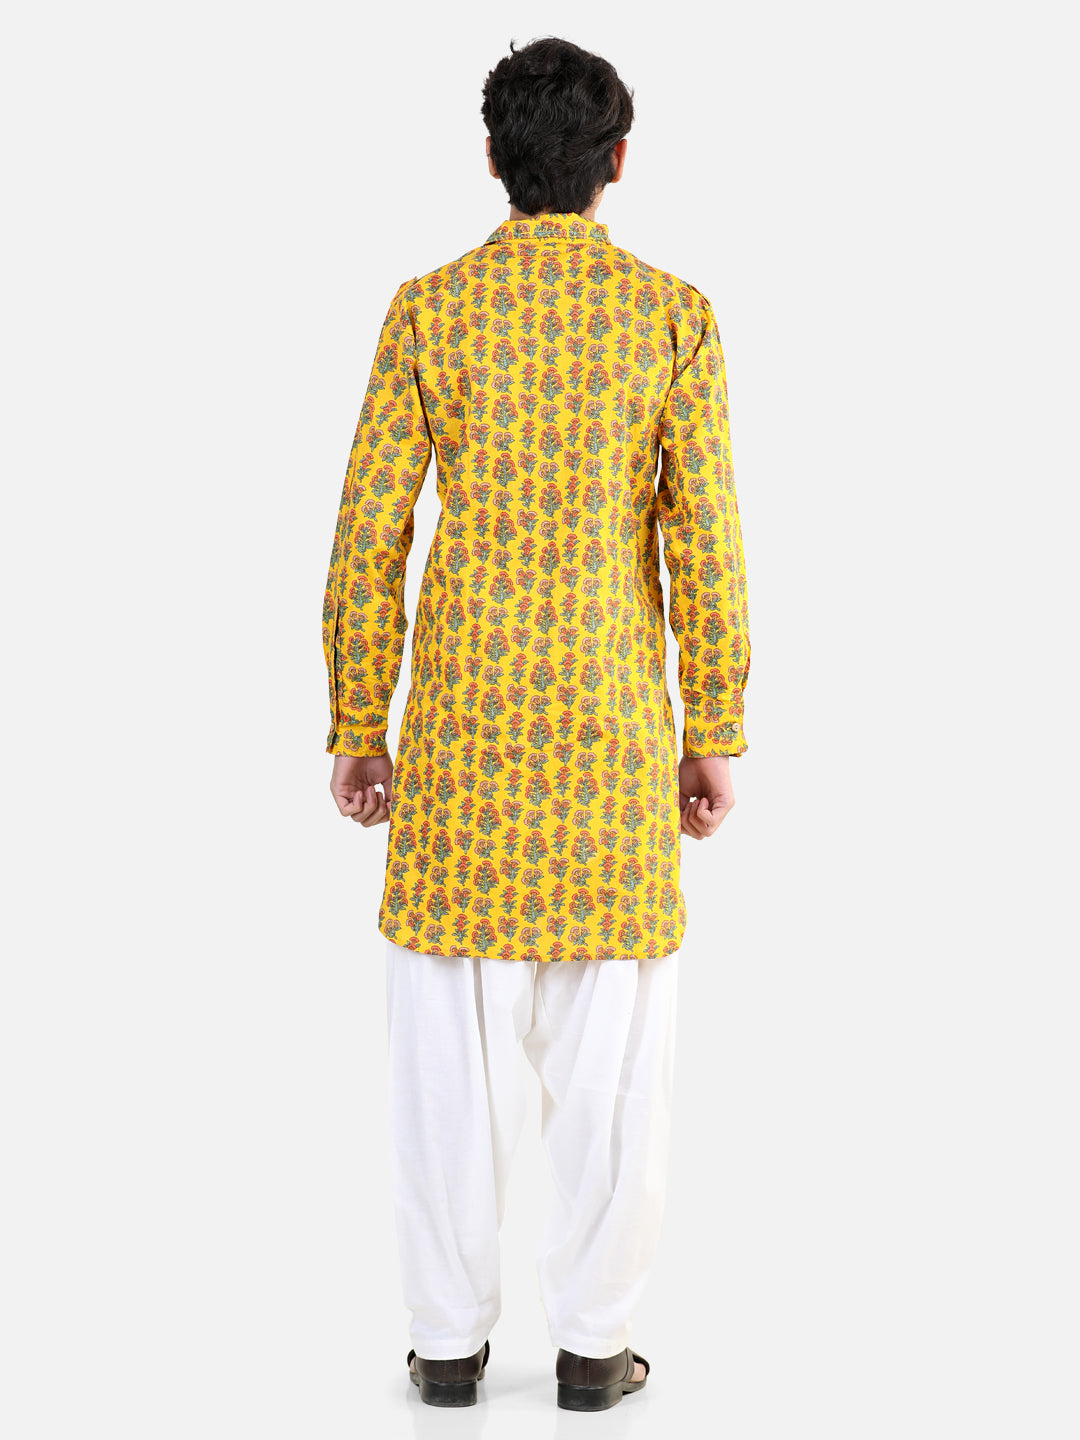 BownBee Printed Cotton Full Sleeve Pathani Salwar Set for Boys- Yellow